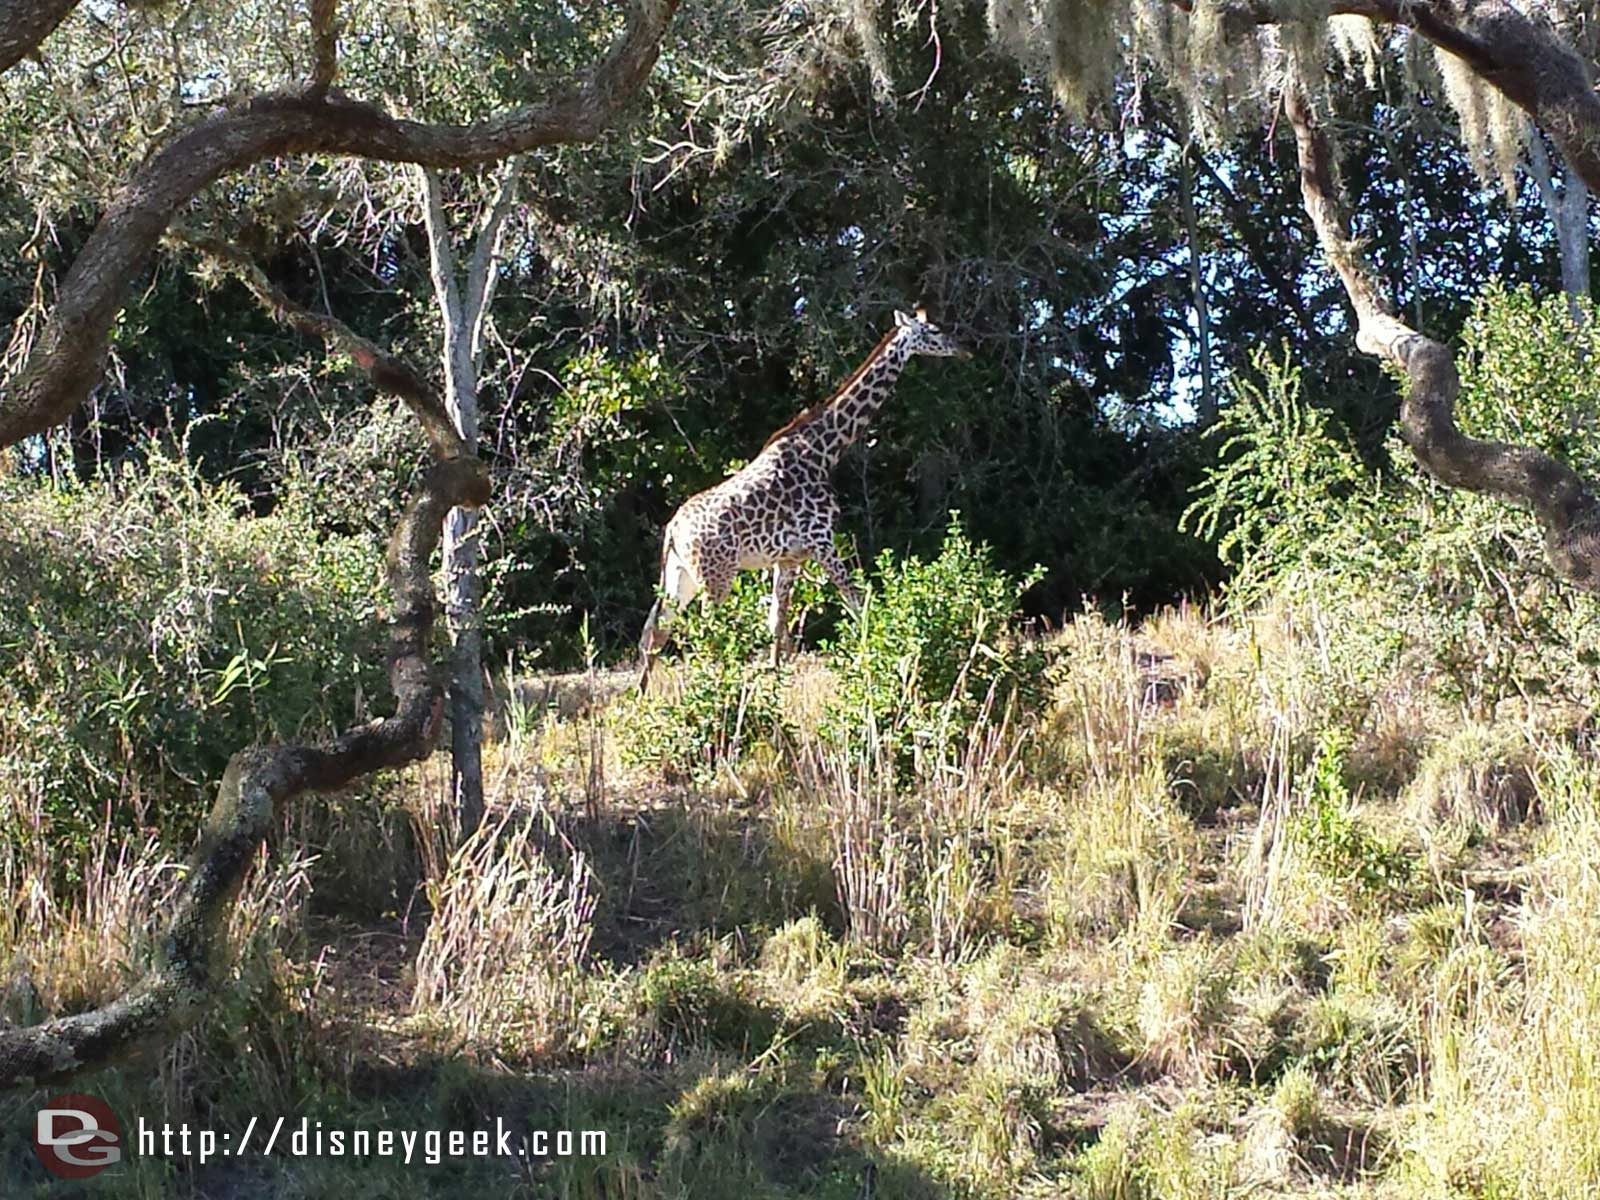 A giraffe on the savanna.